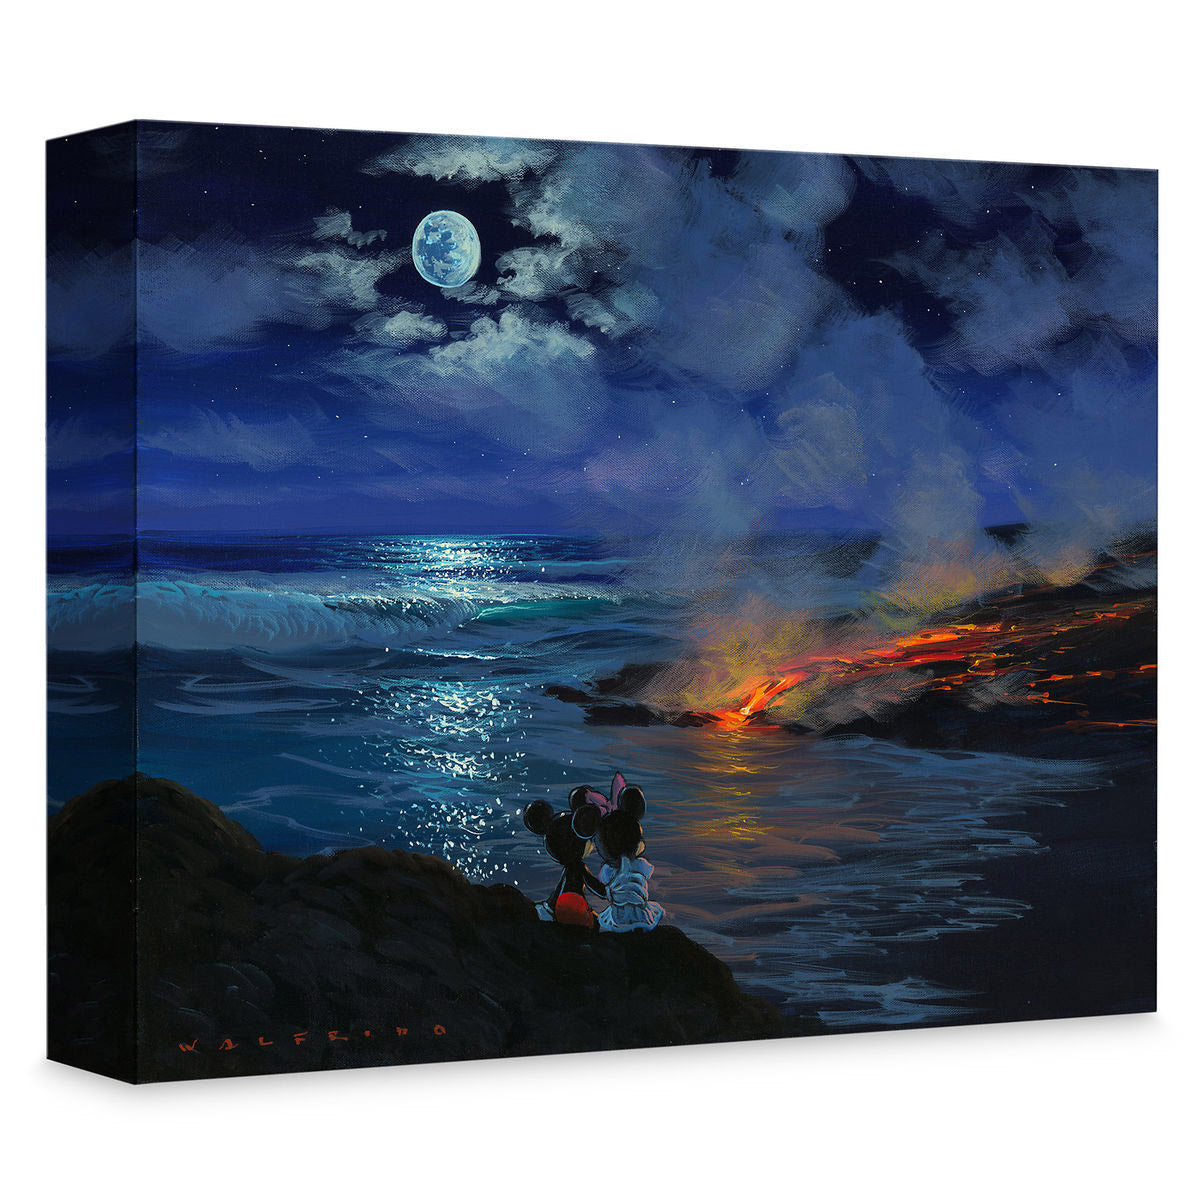 Walfrido Garcia Disney "Watching Nature's Creation" Limited Edition Canvas Giclee